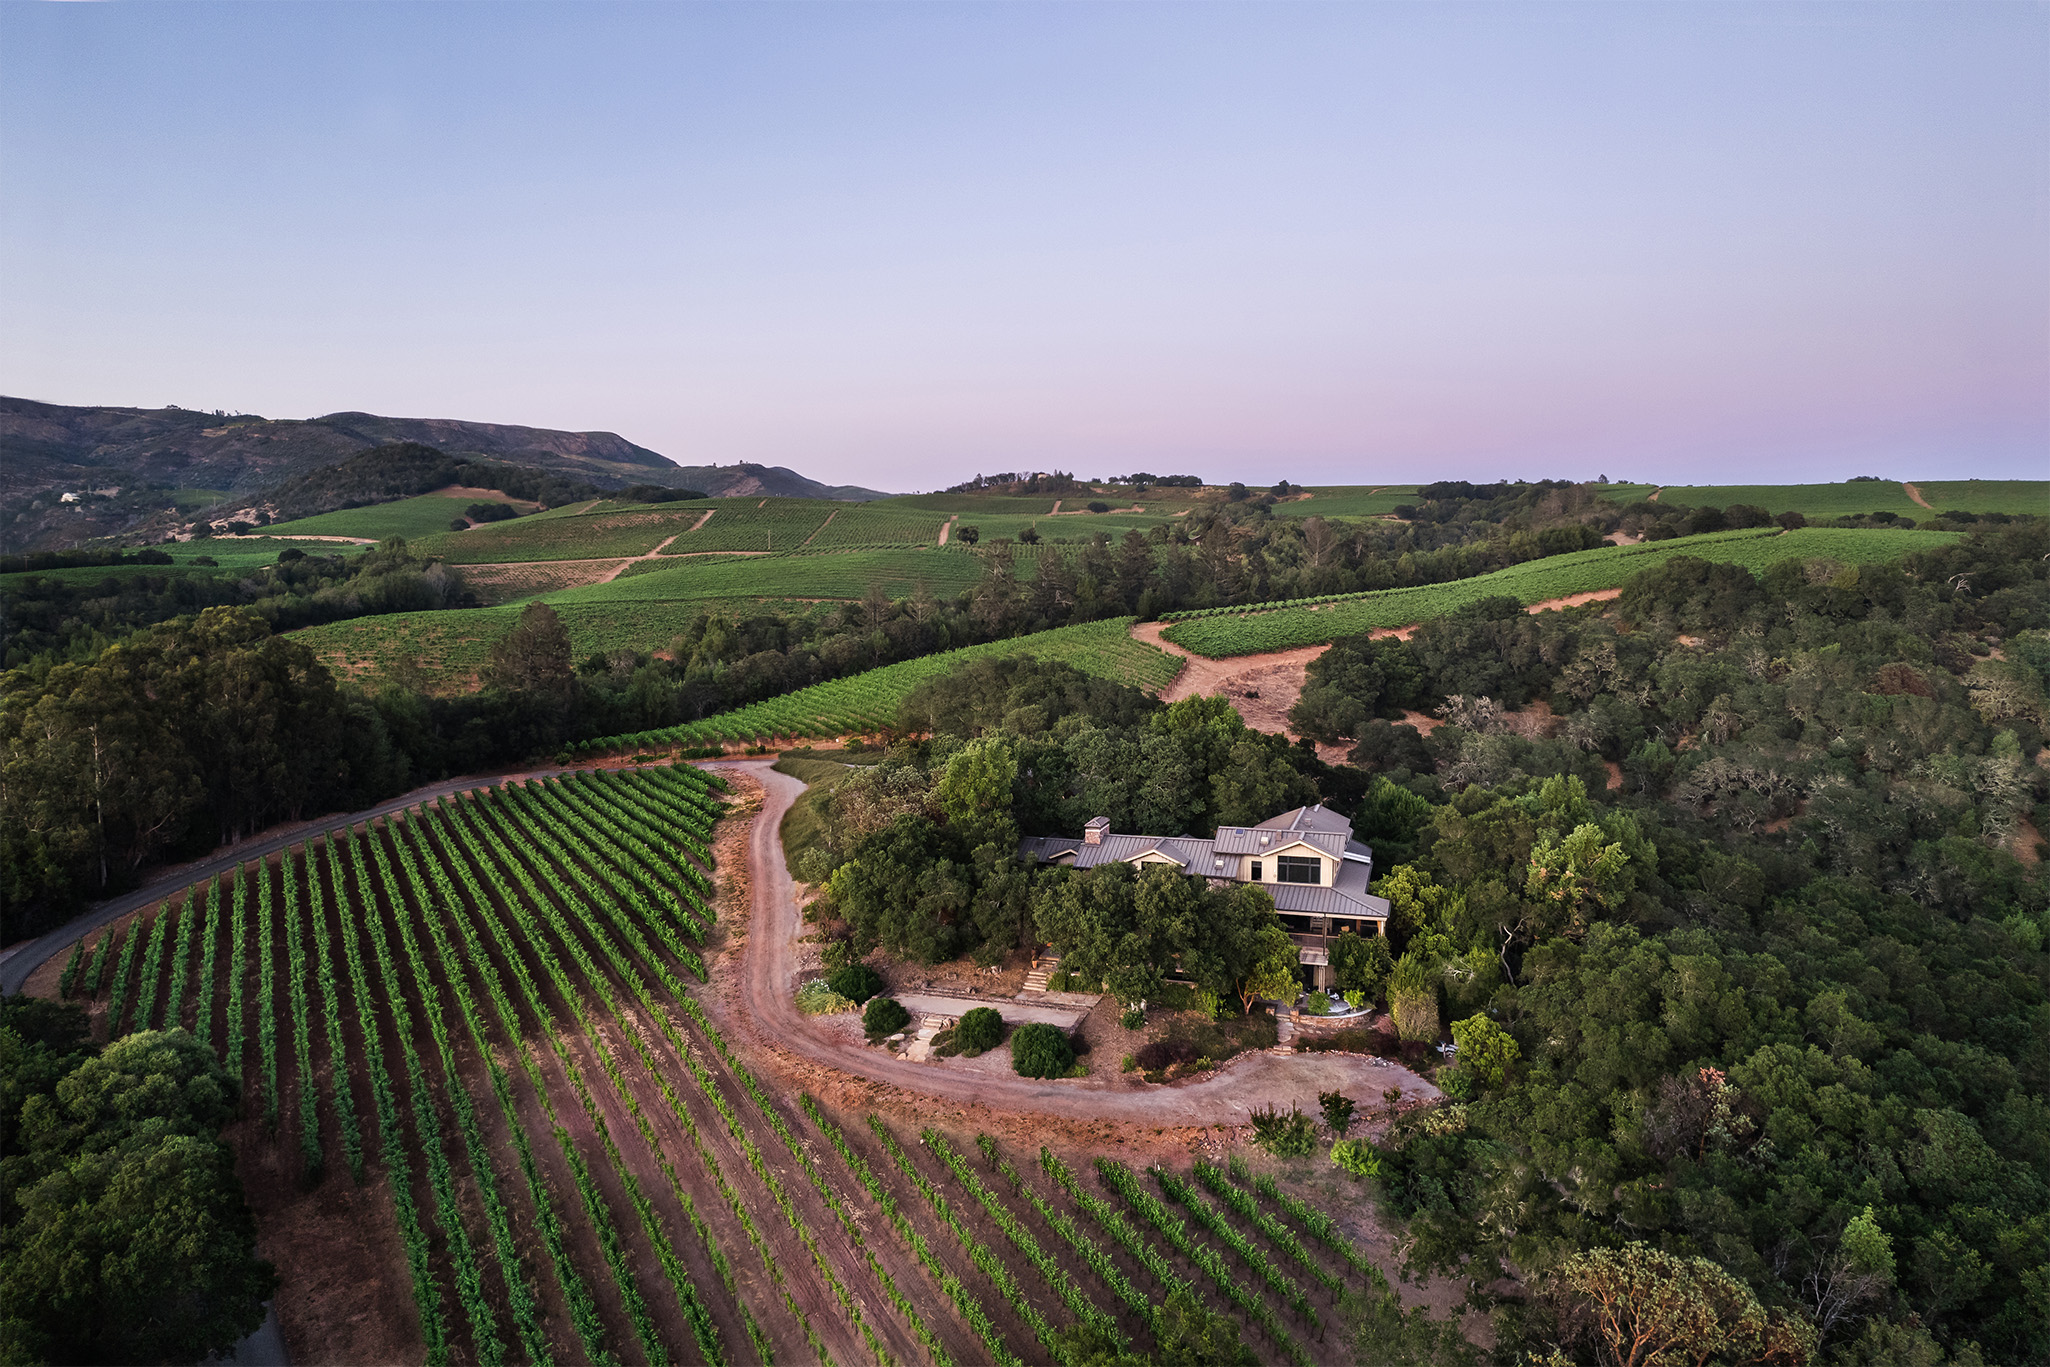 Arrowood Lodge and vineyard